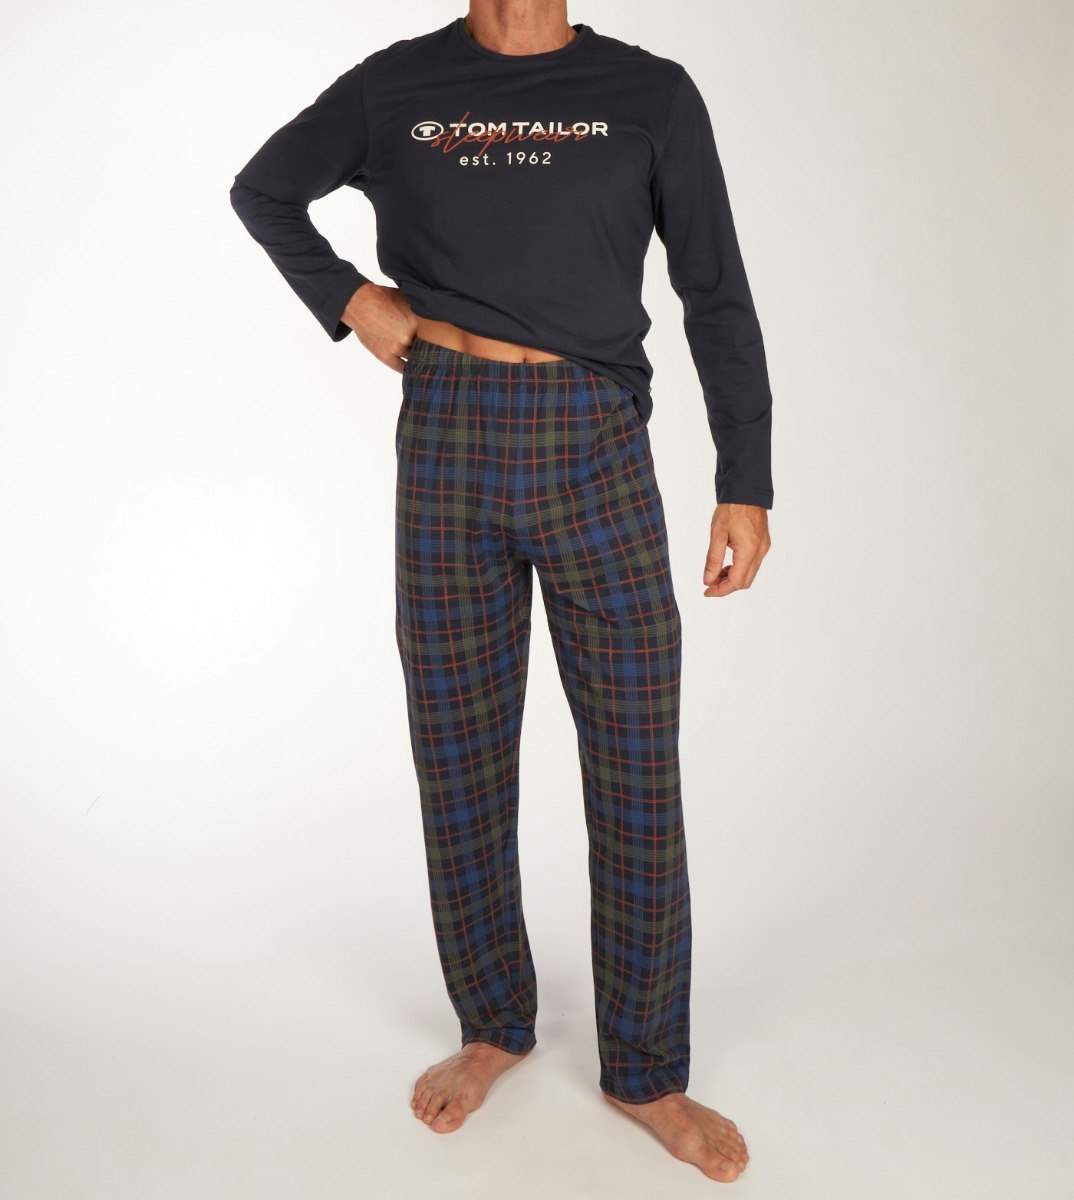 Tom Tailor broek lange H pyjama 71345-4009-634